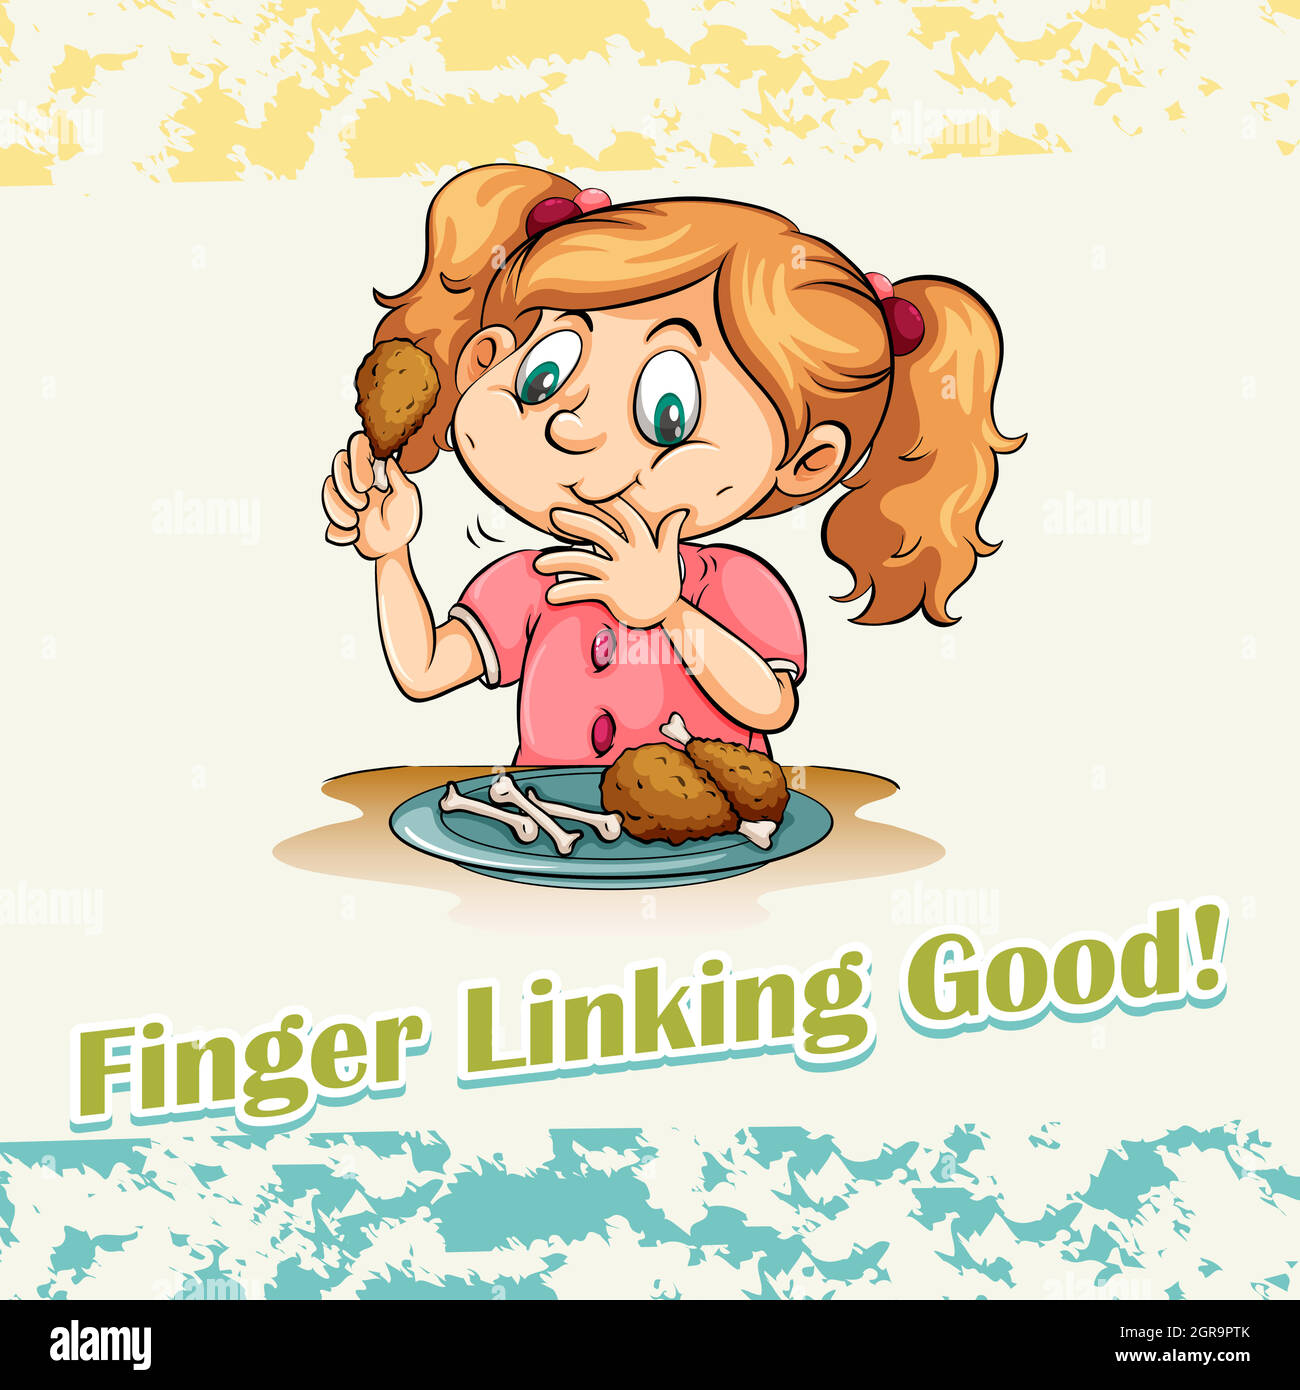 Idiom finger linking good Stock Vector